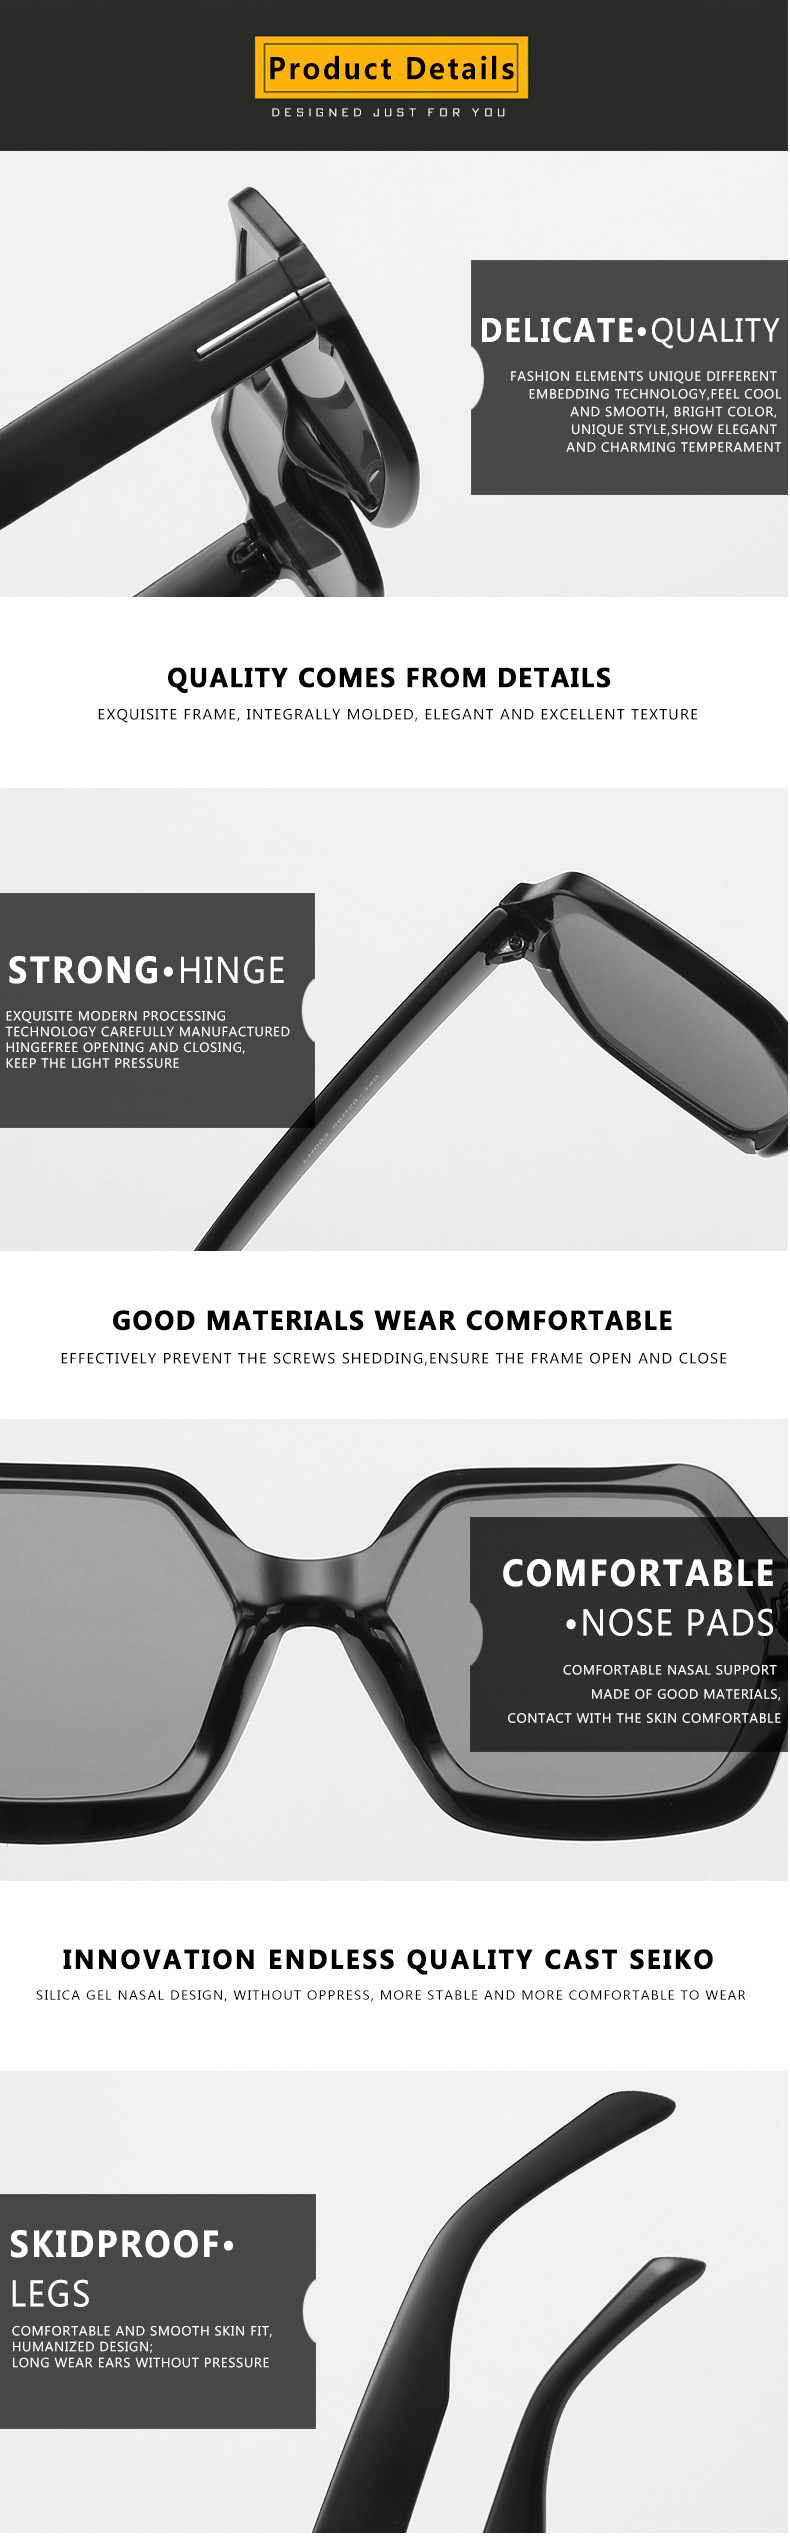 square fashion sunglasses (4)